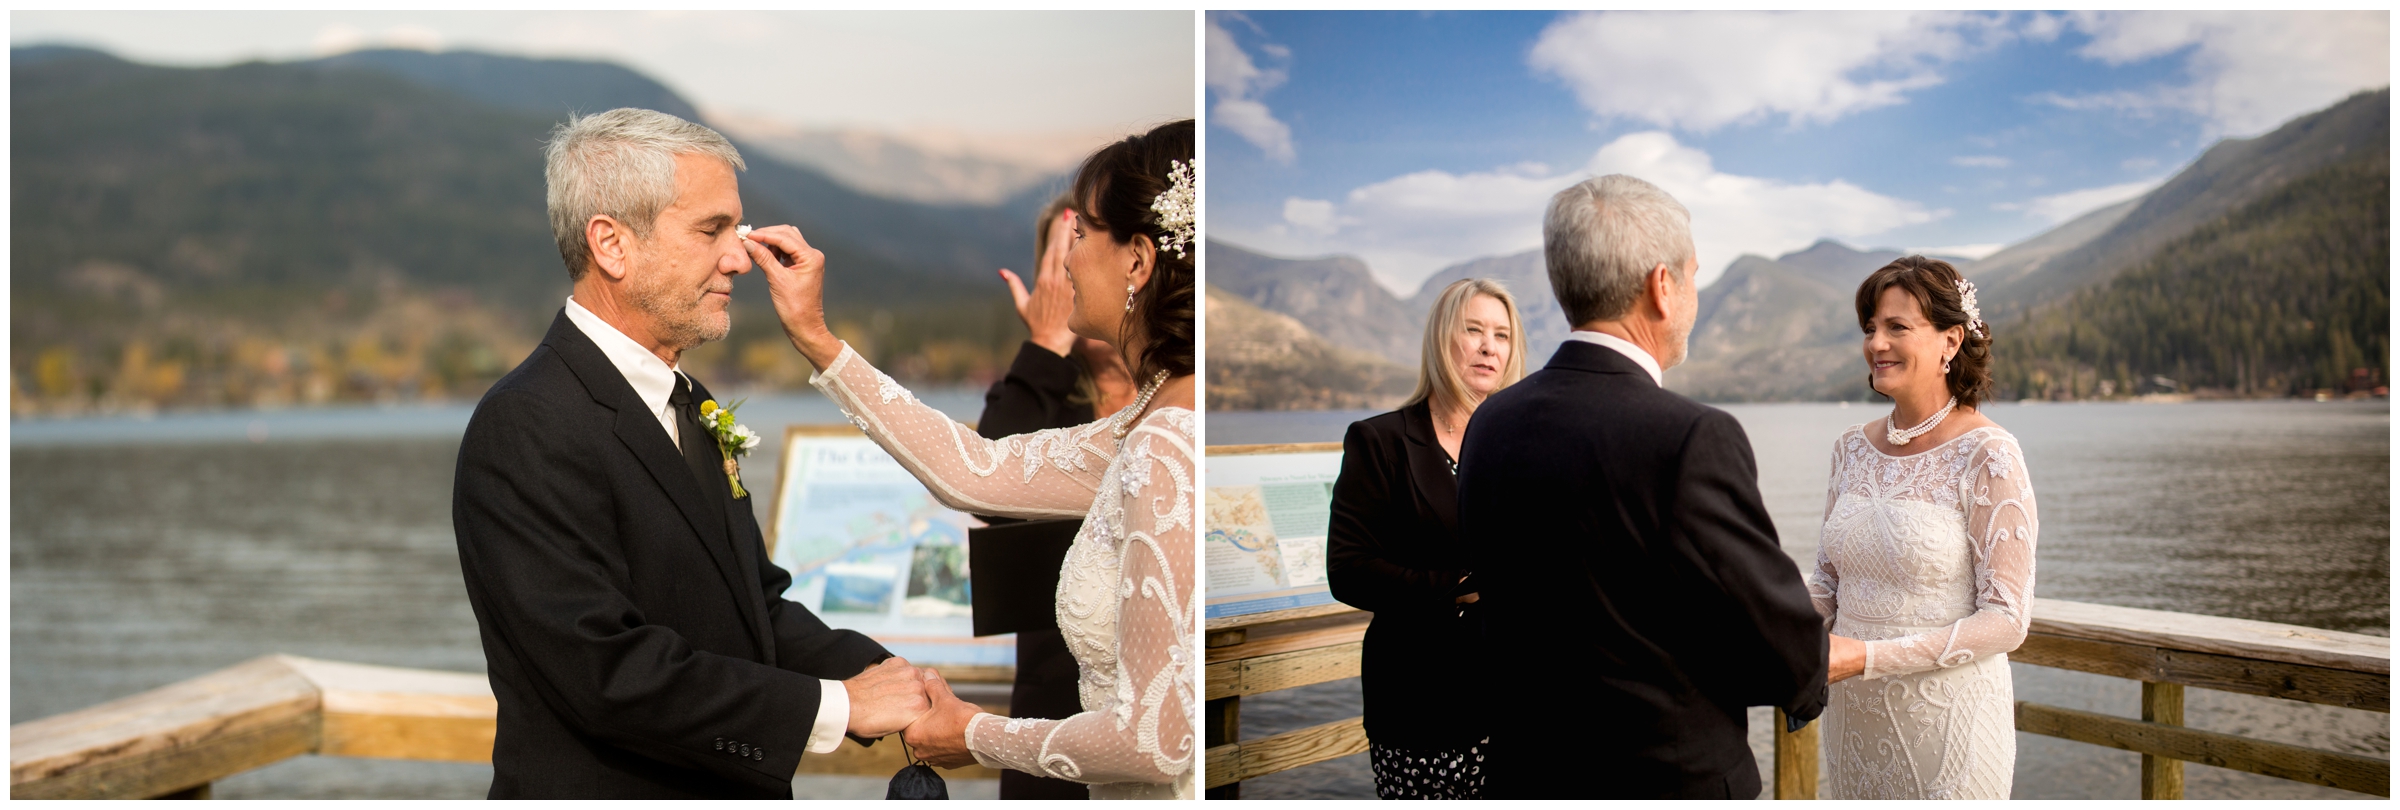 Point Park Grand Lake wedding ceremony inspiration 